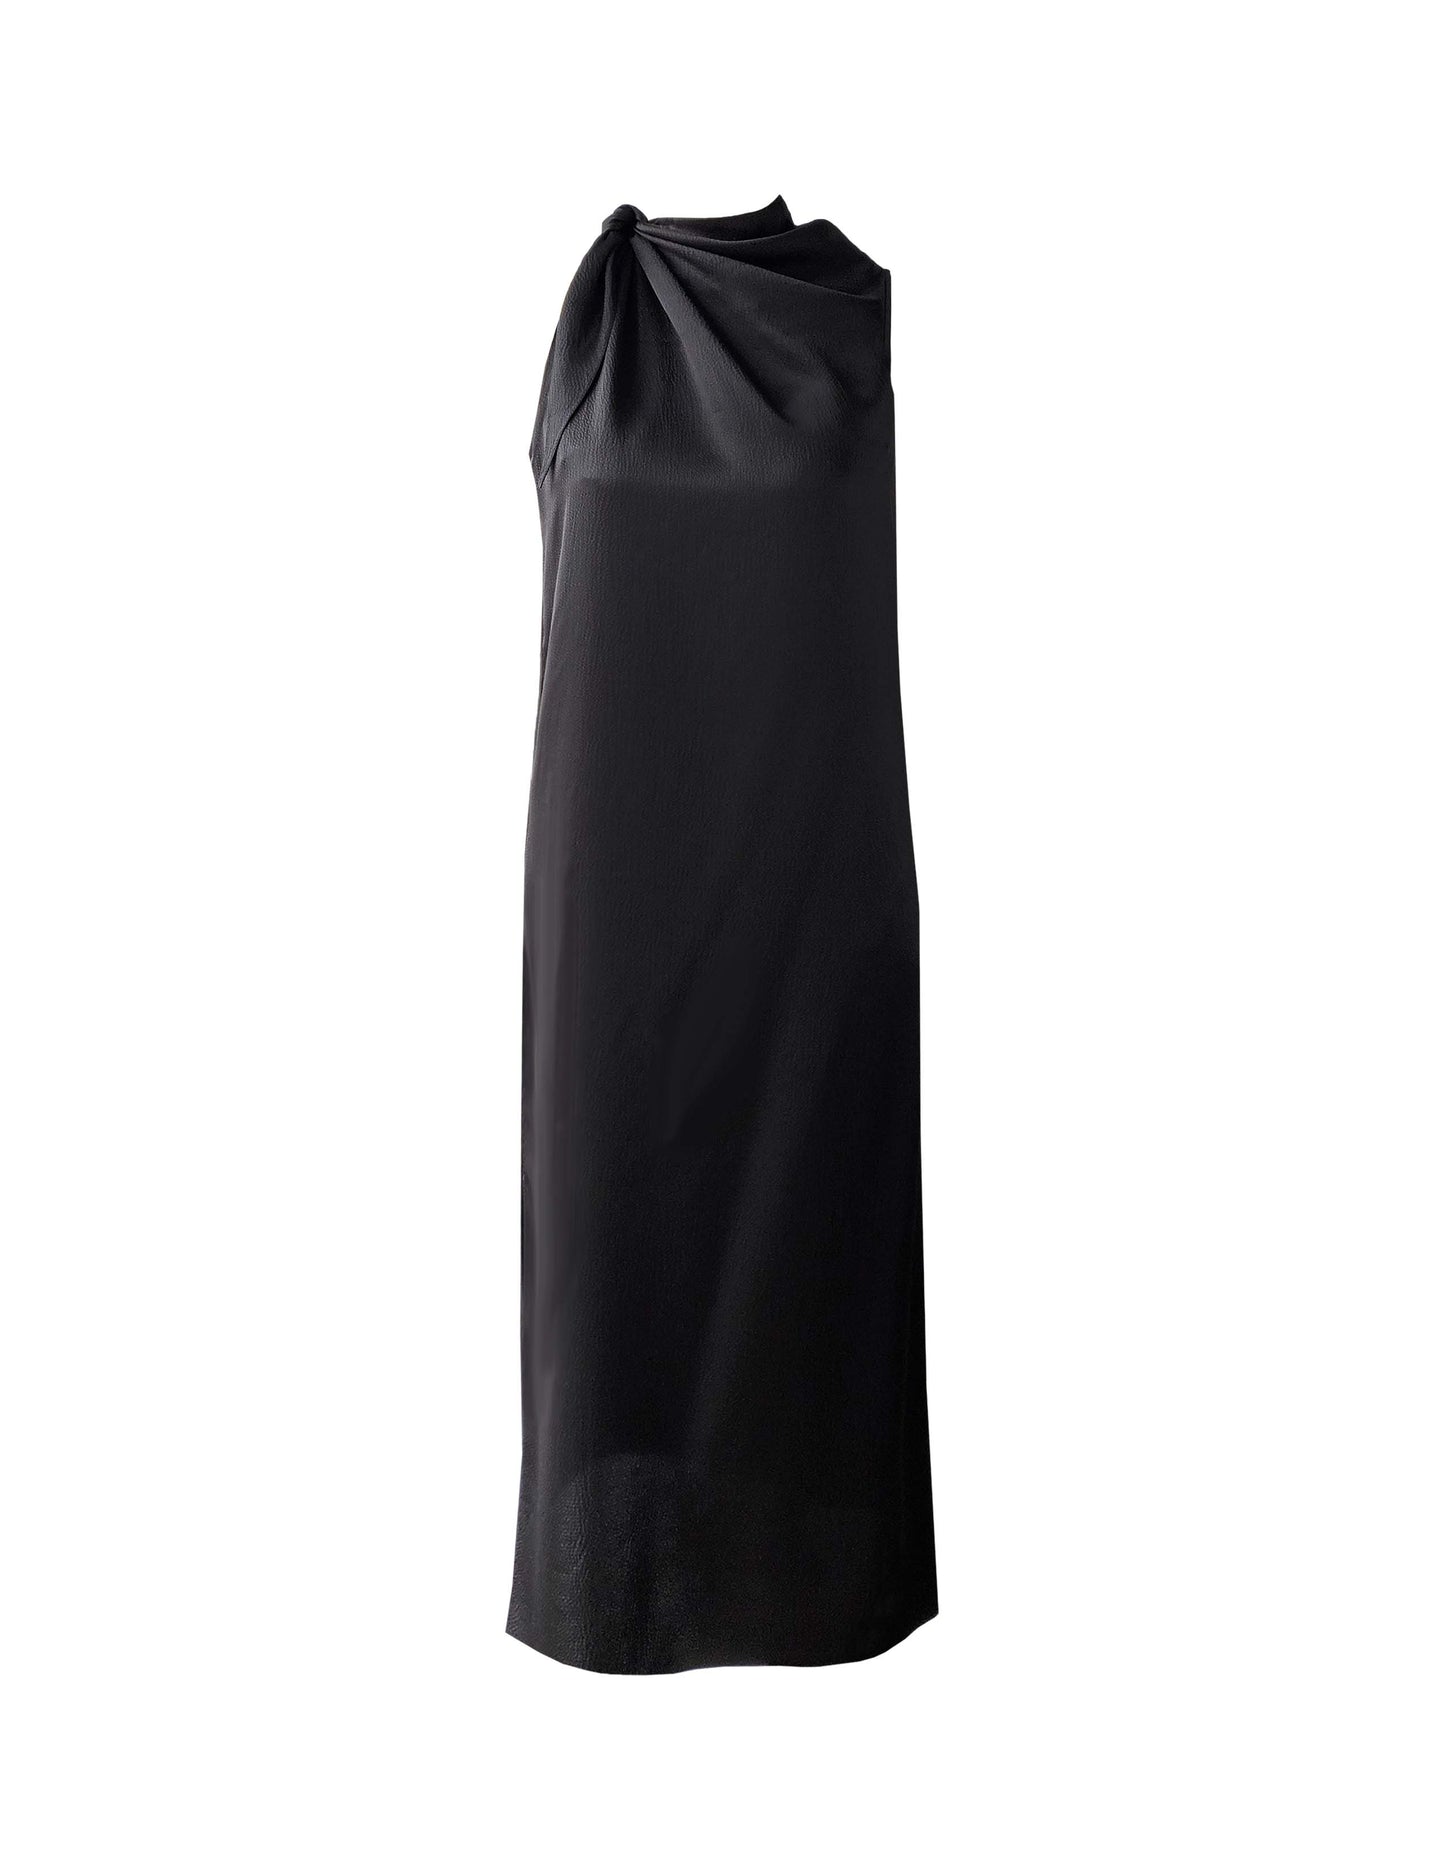 [ 4 ] Scarf Dress in Black Hammered Silk